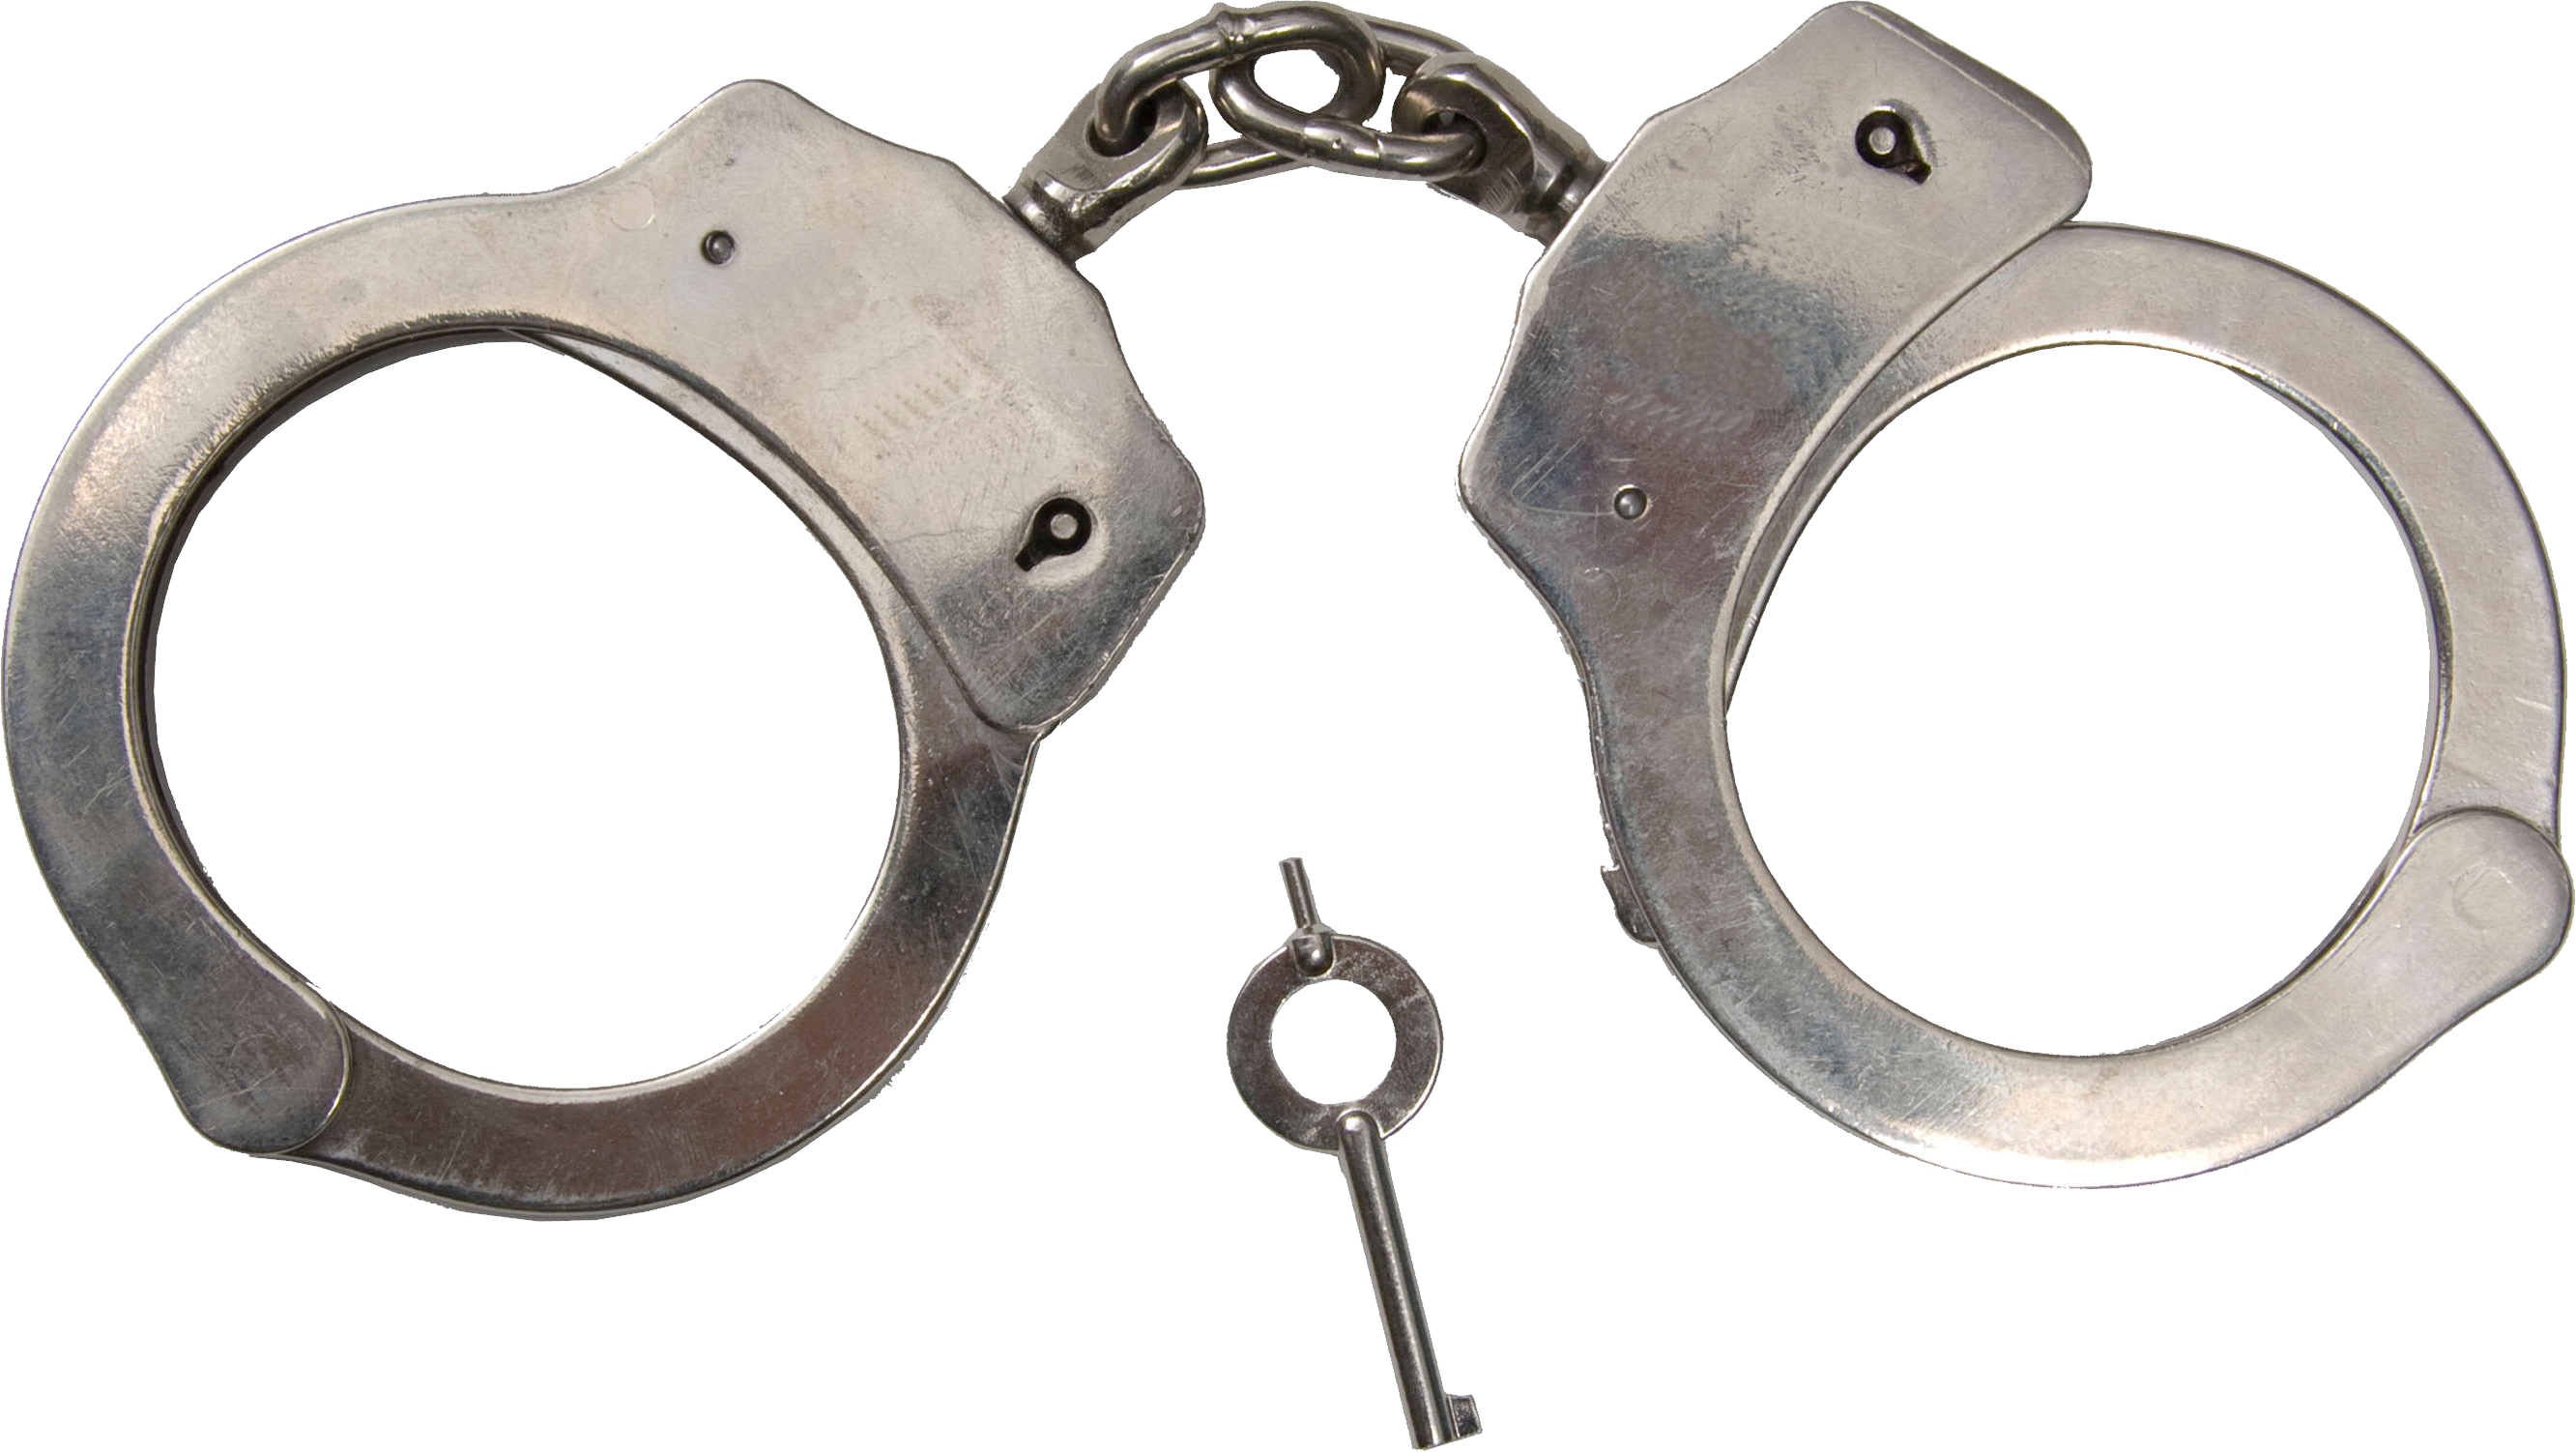 Handcuffs PNG HD - 120993